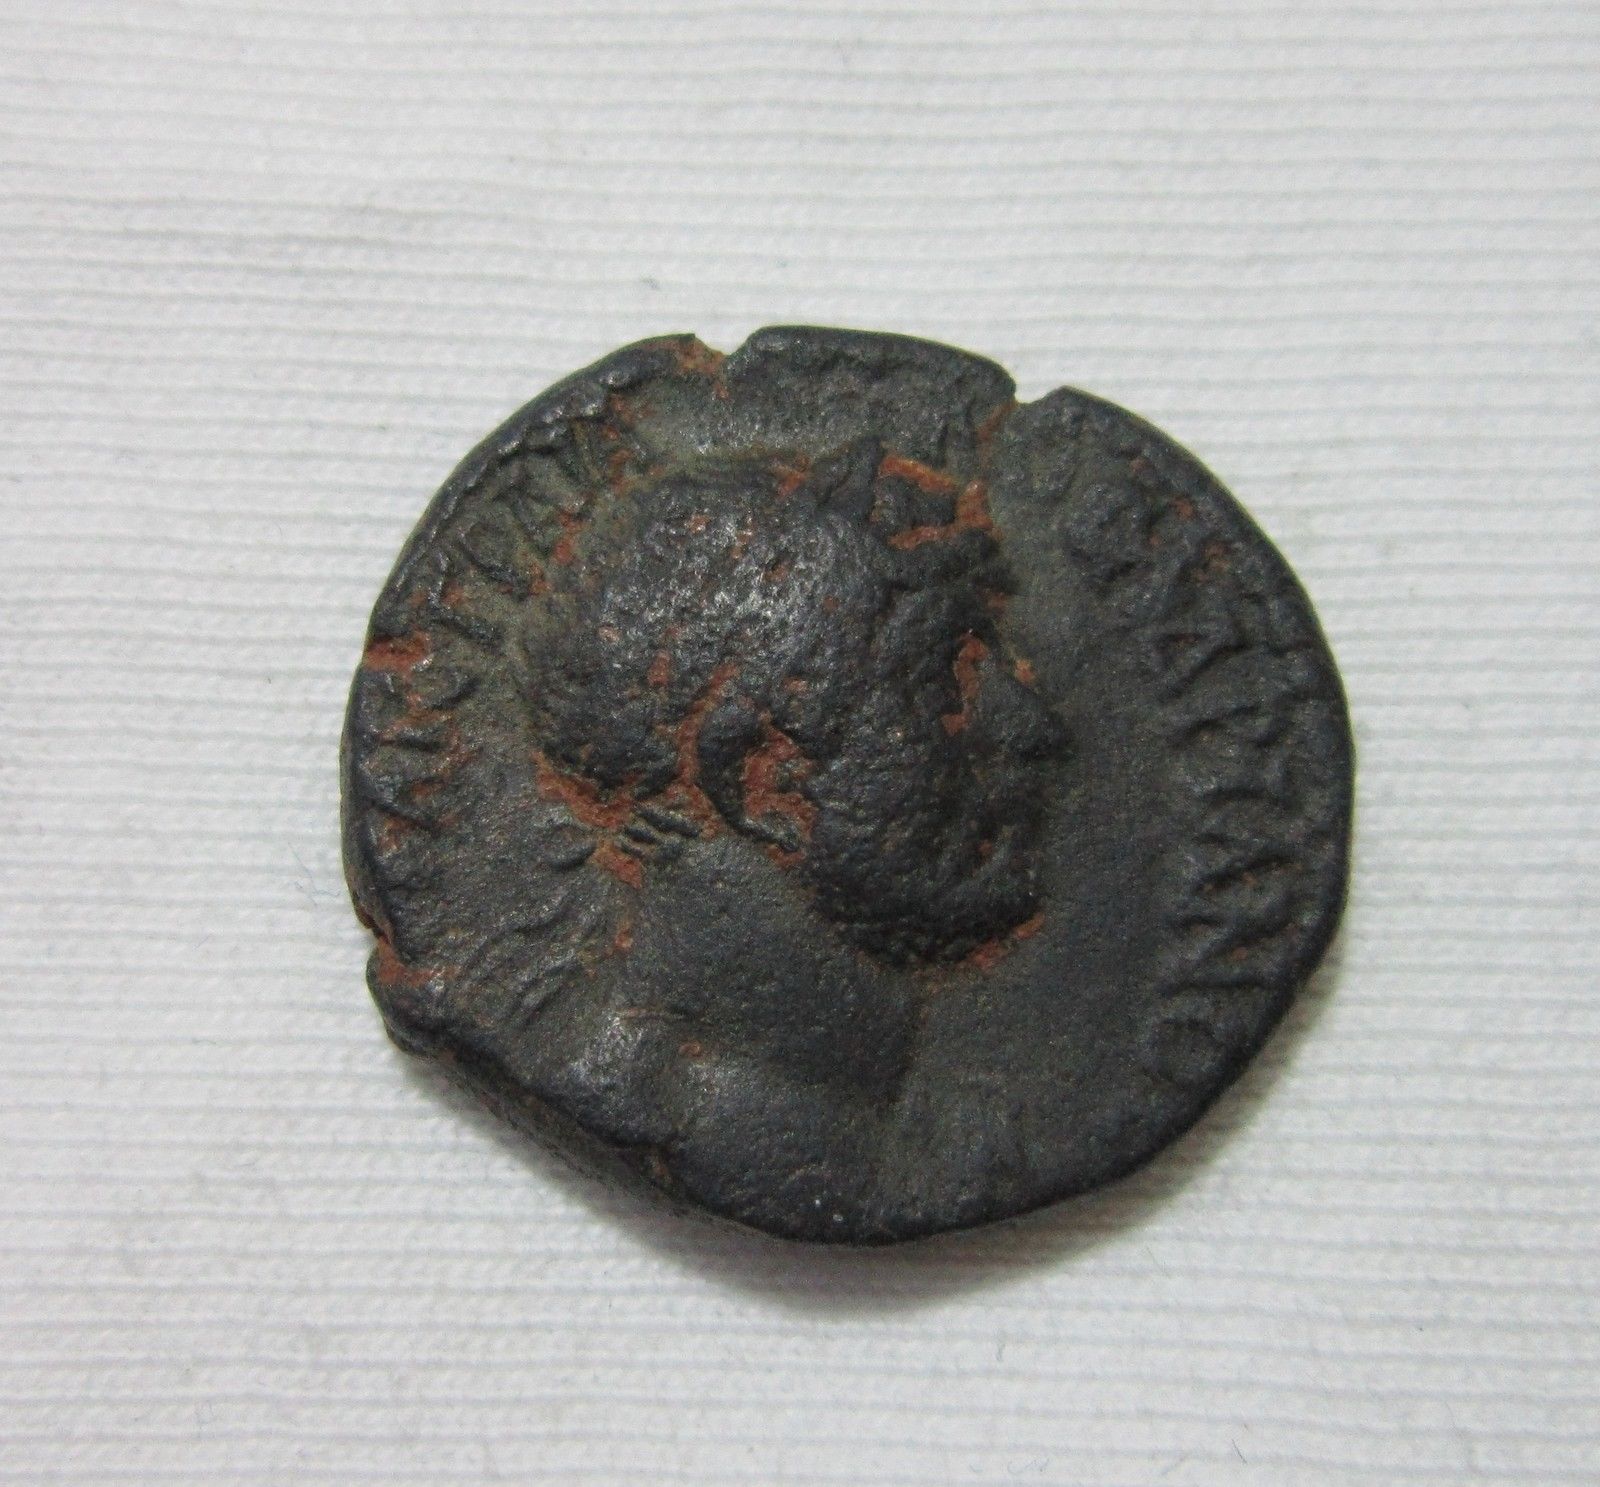 SYRIA, CHALCIS. AE 24. HADRIAN 117-138 AD. WREATH REVERSE. SCARCE. DESERT PATINA